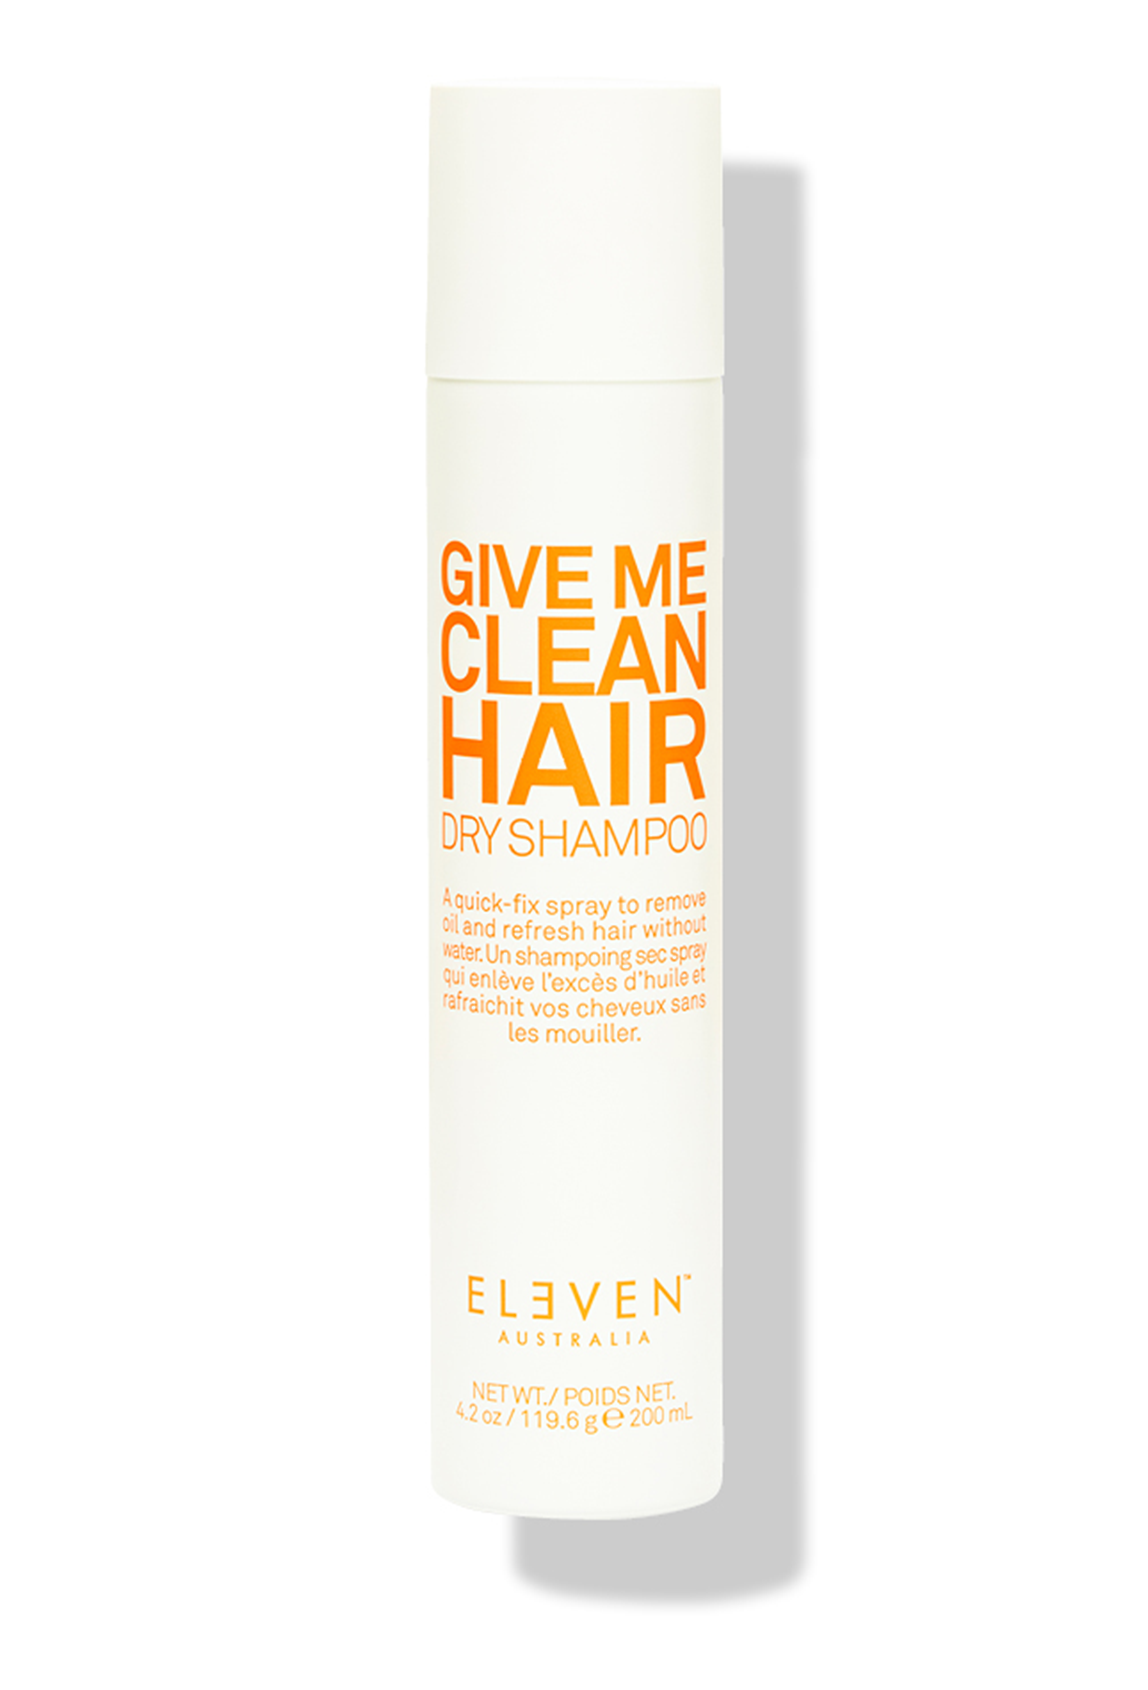 Eleven Australia give me clean hair dry shampoo